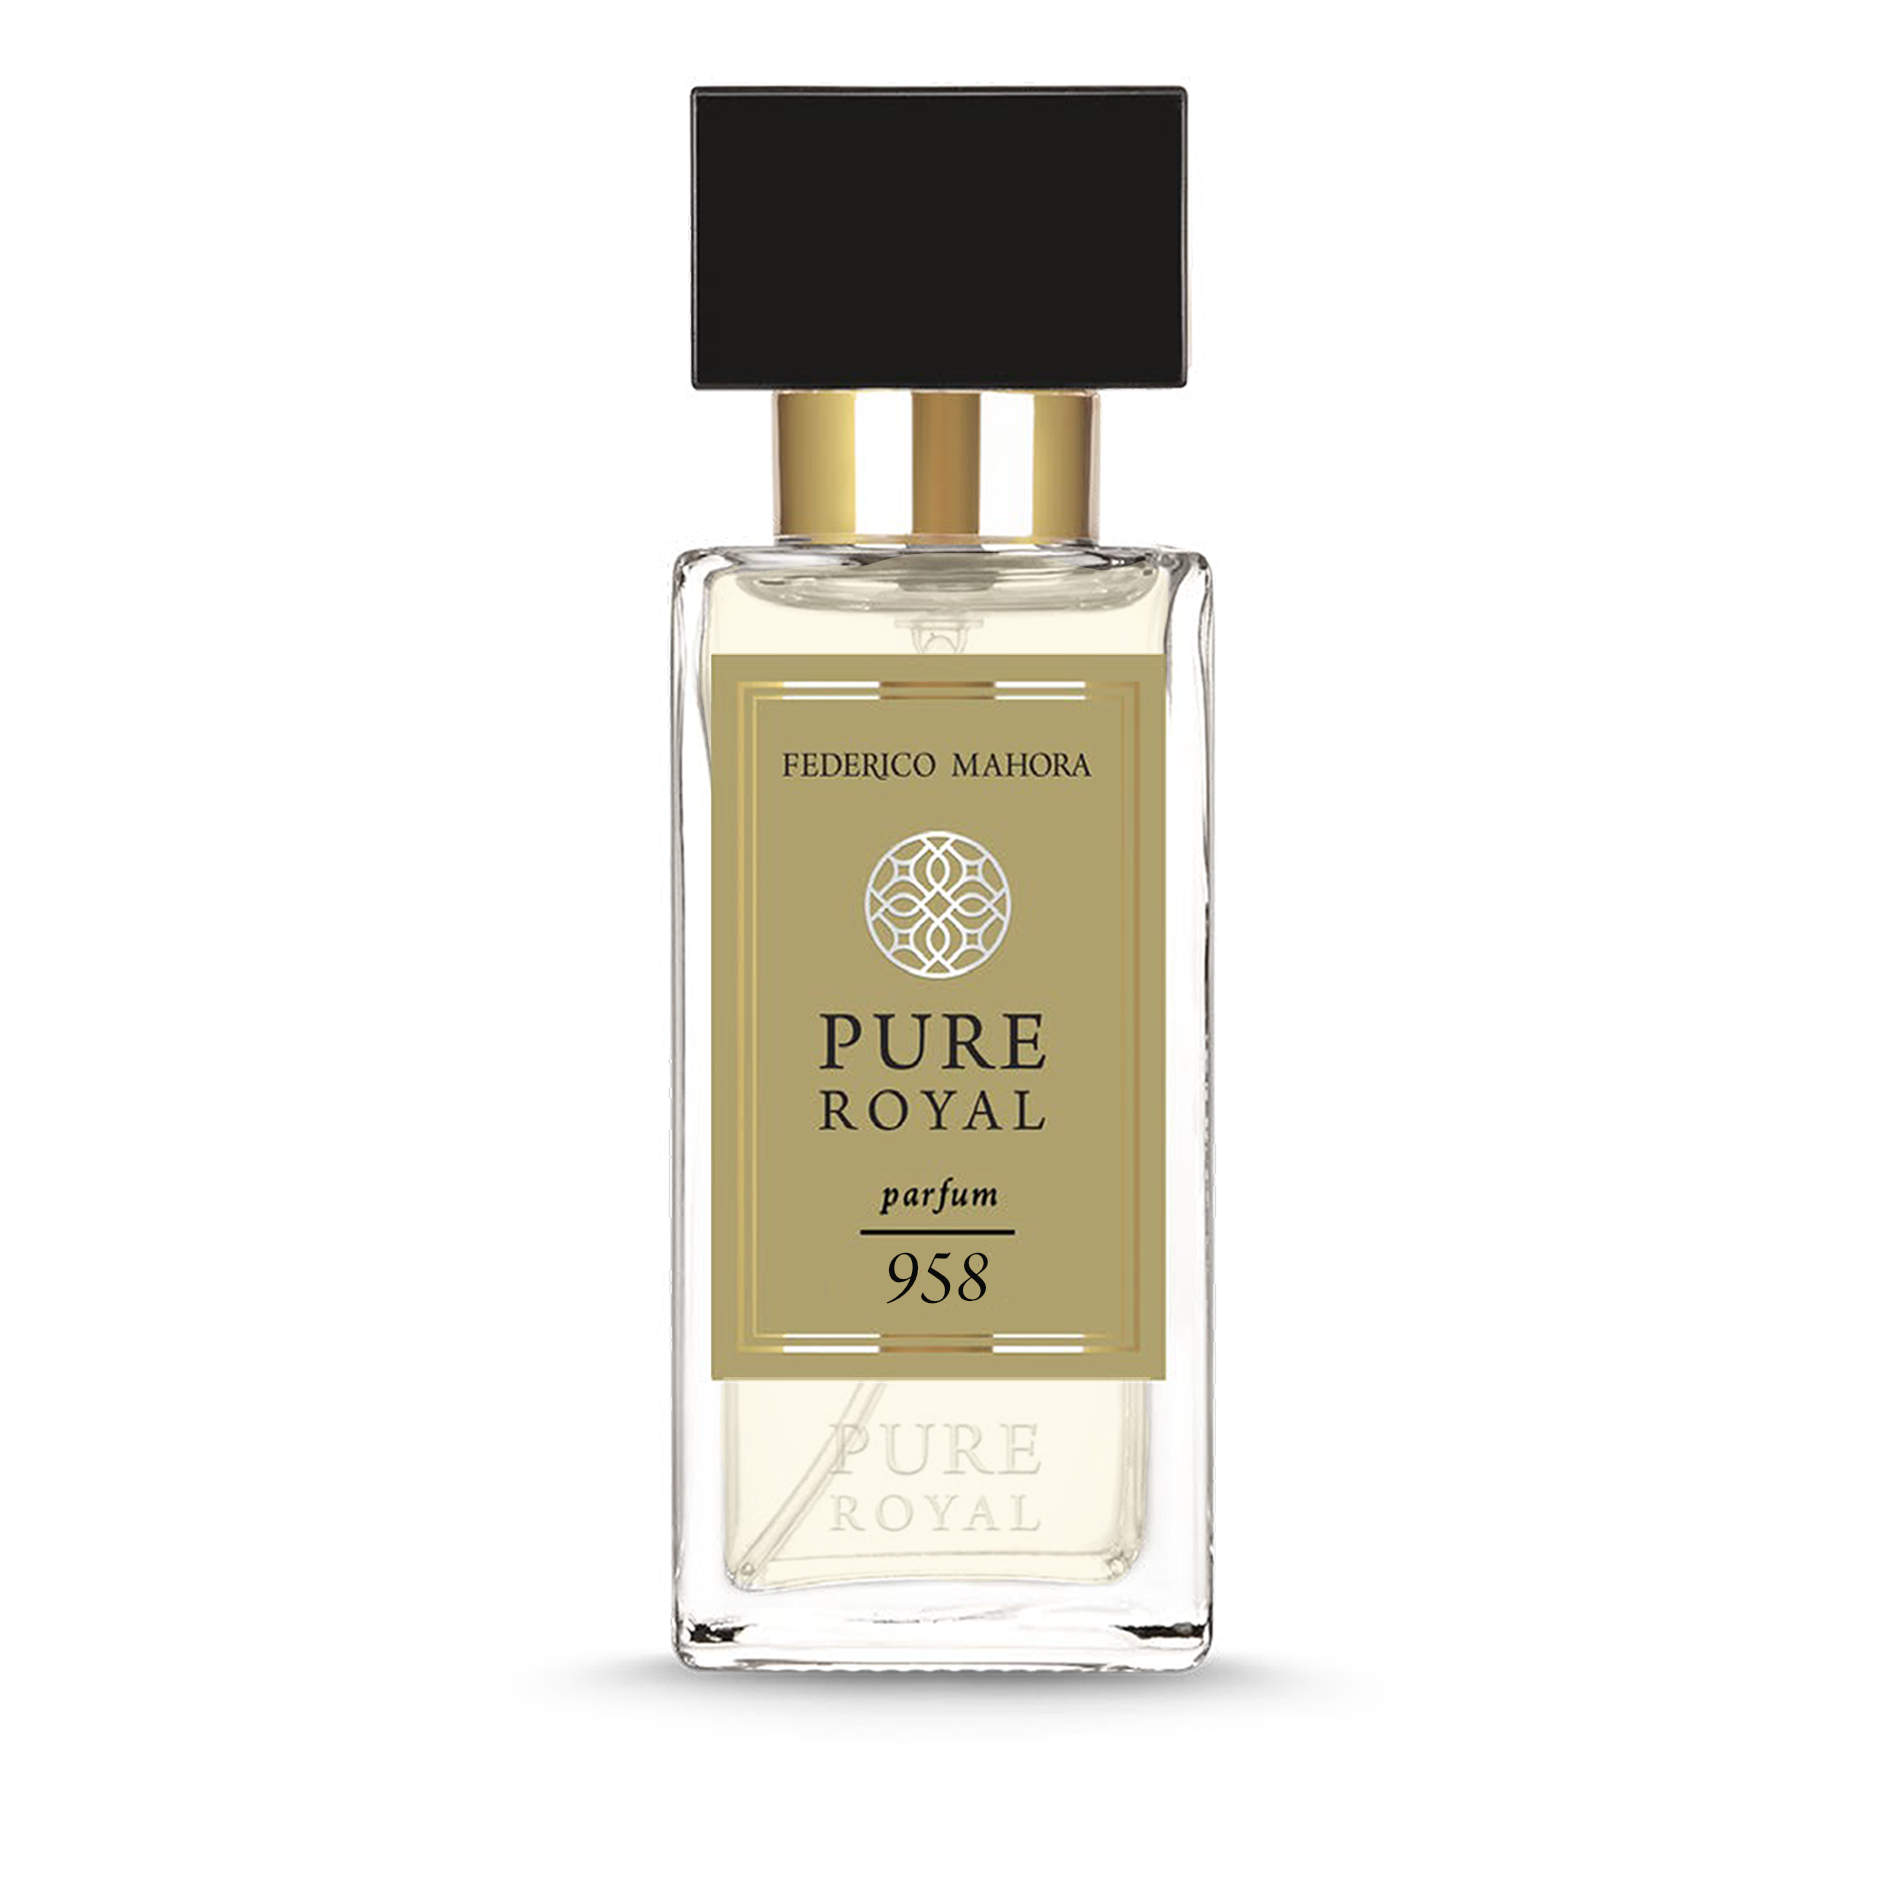 PURE ROYAL 958 Parfum Federico Mahora